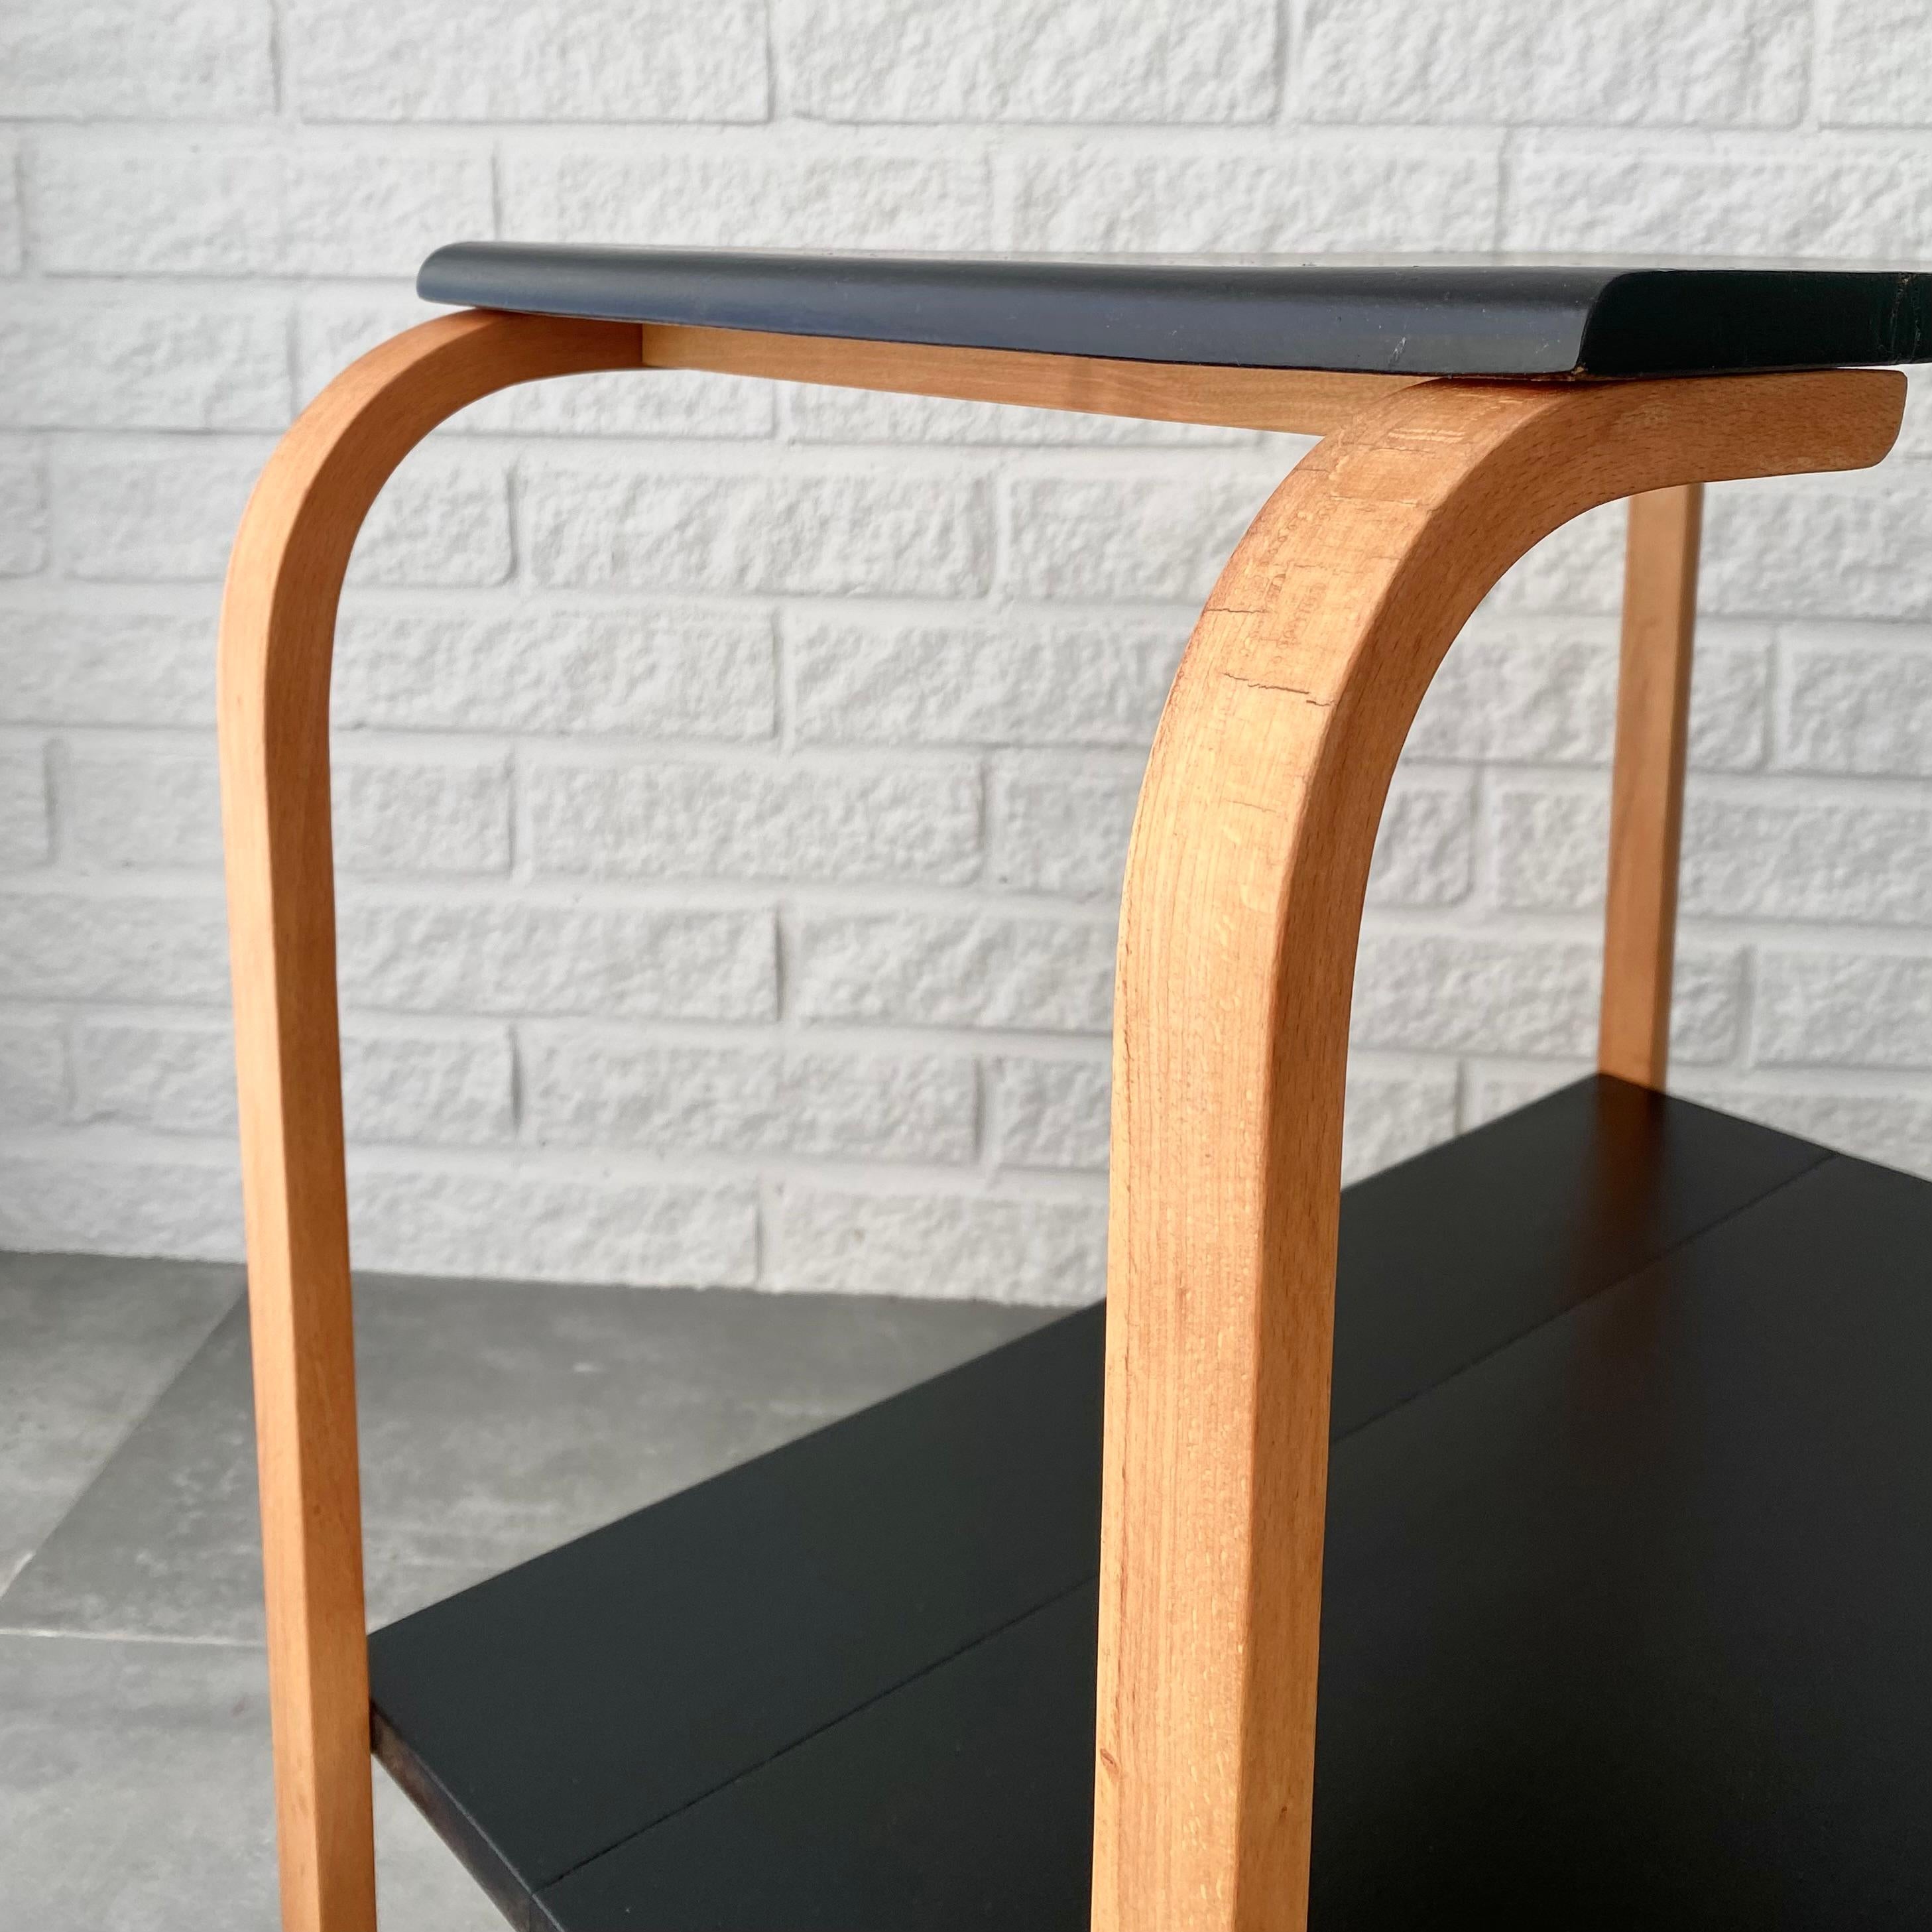 Molded Bentwood modernist side table by Gemla Fabriker, Sweden, 1930s